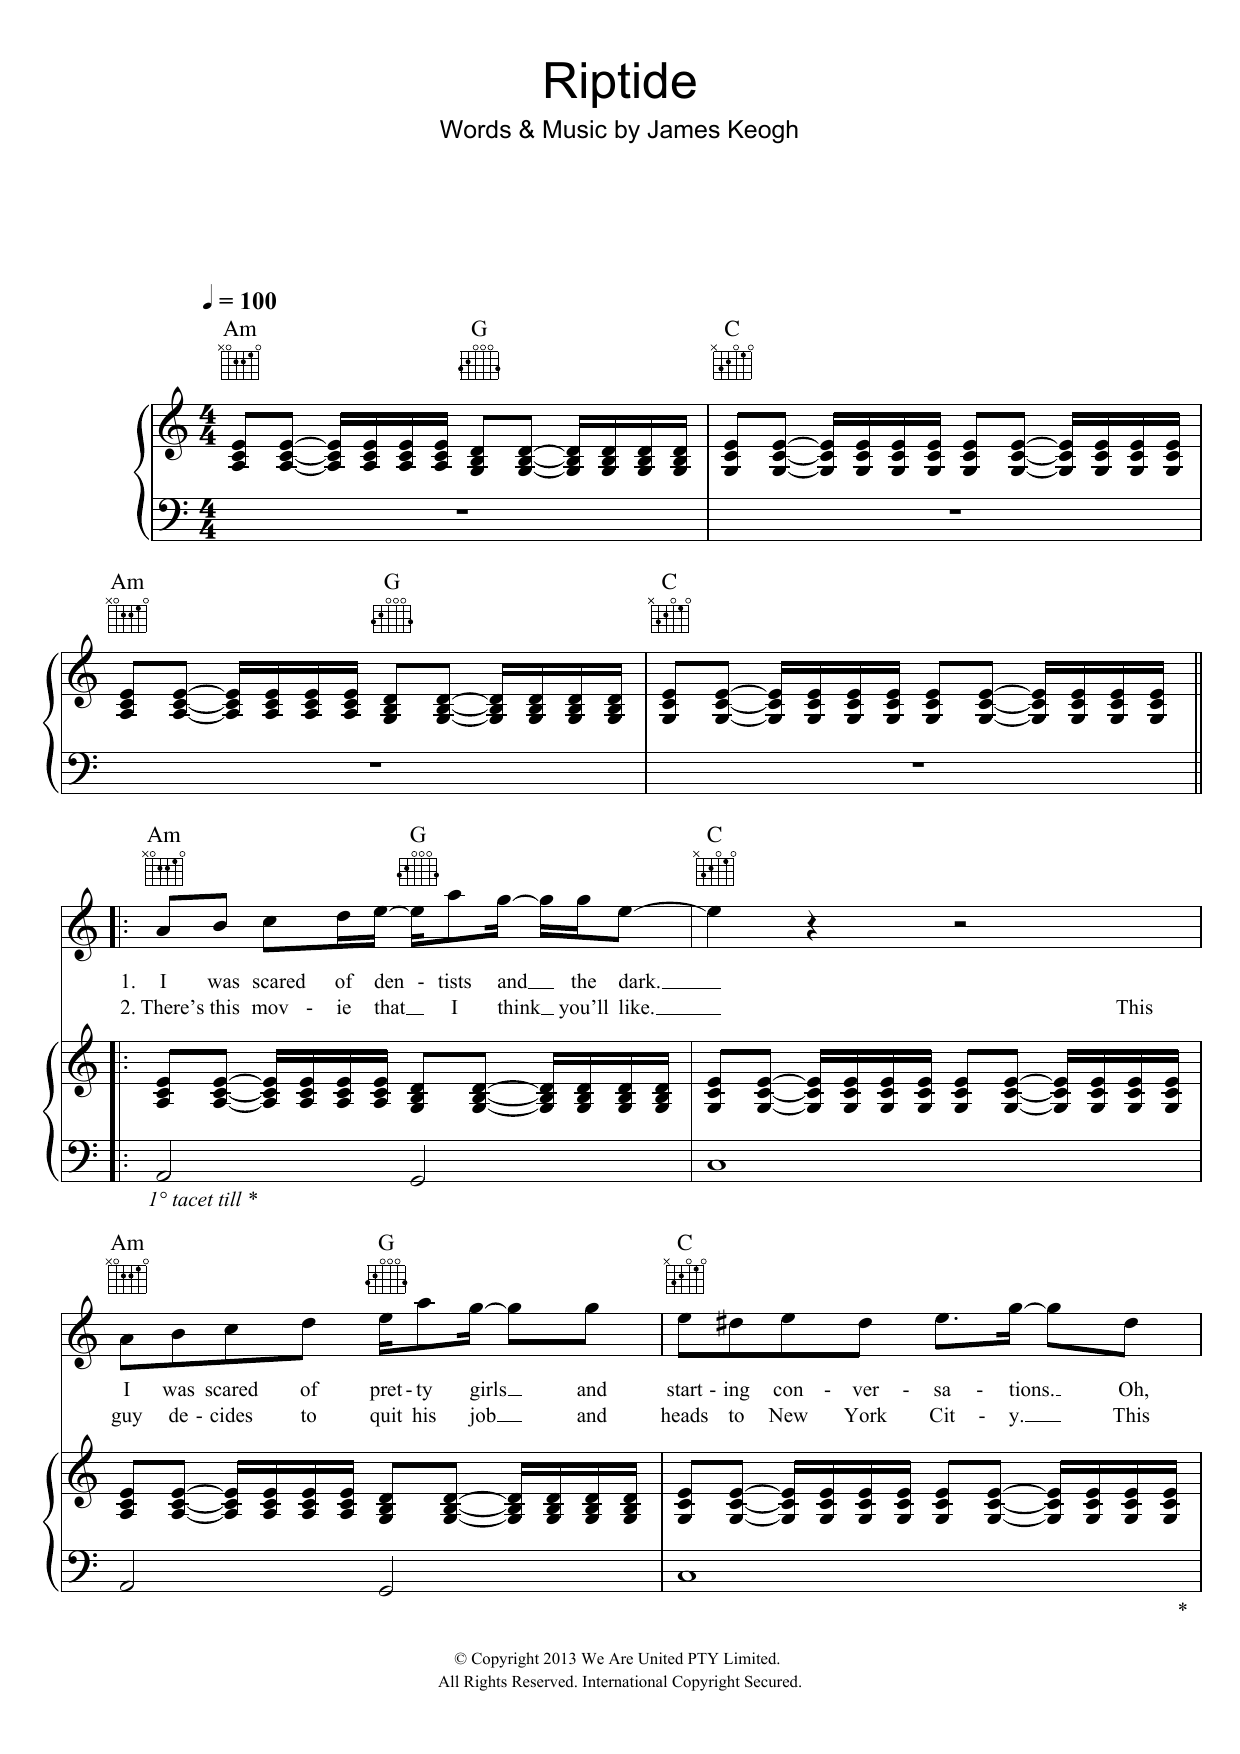 Vance Joy Riptide Sheet Music Notes & Chords for UKETAB - Download or Print PDF